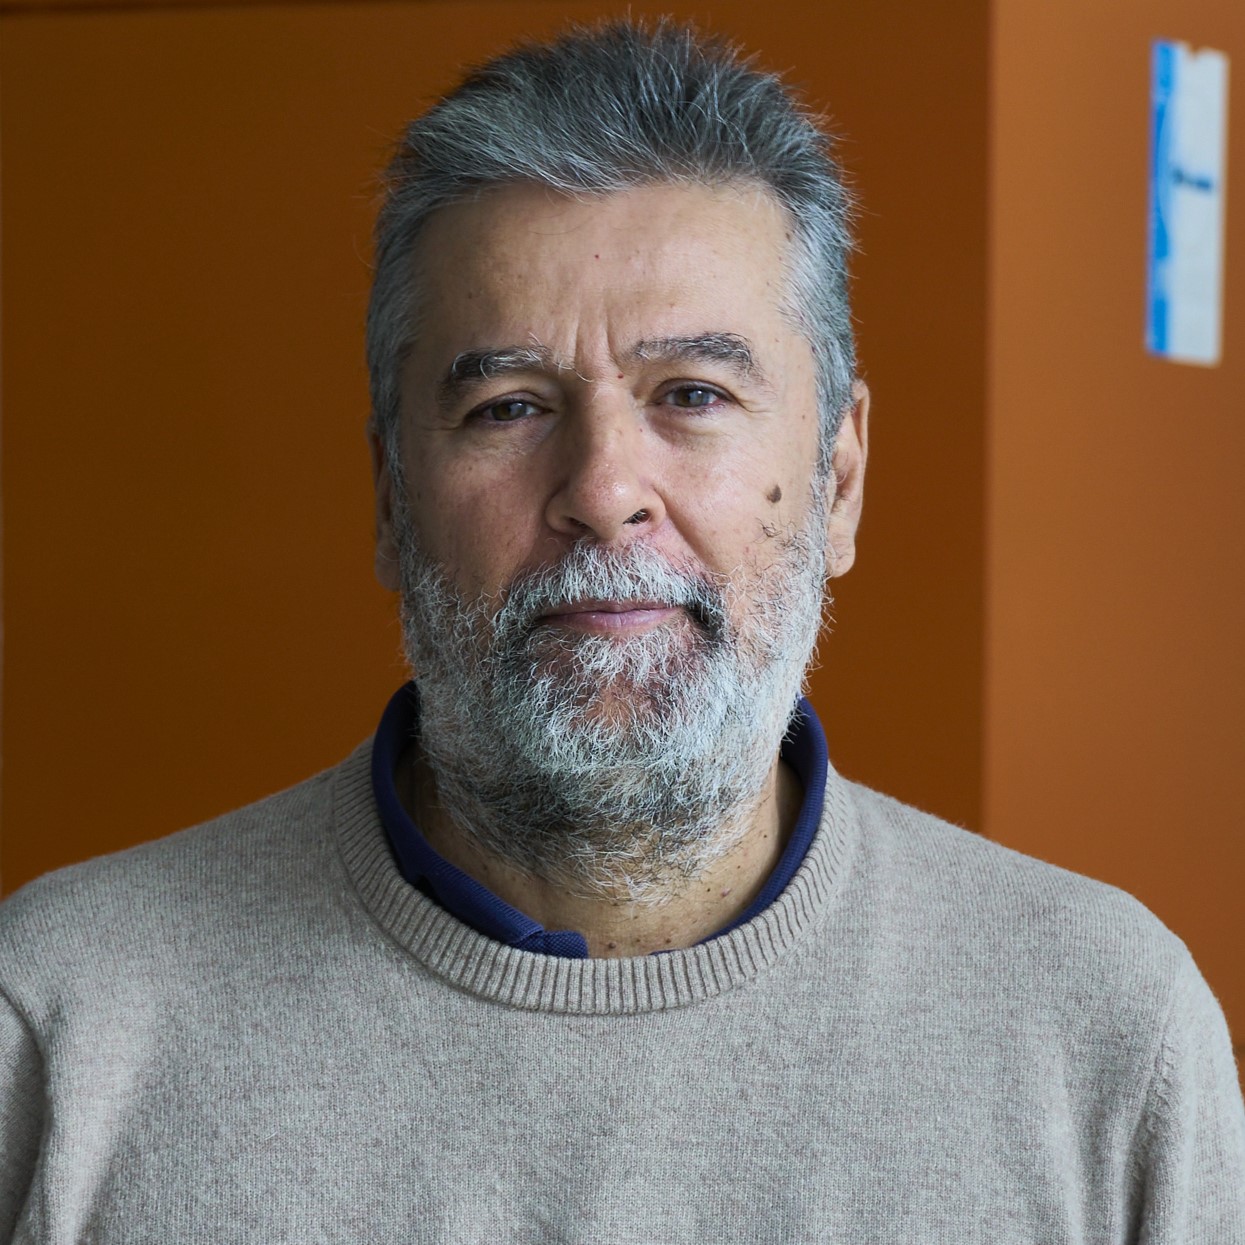 Marco A. Márquez Sánchez